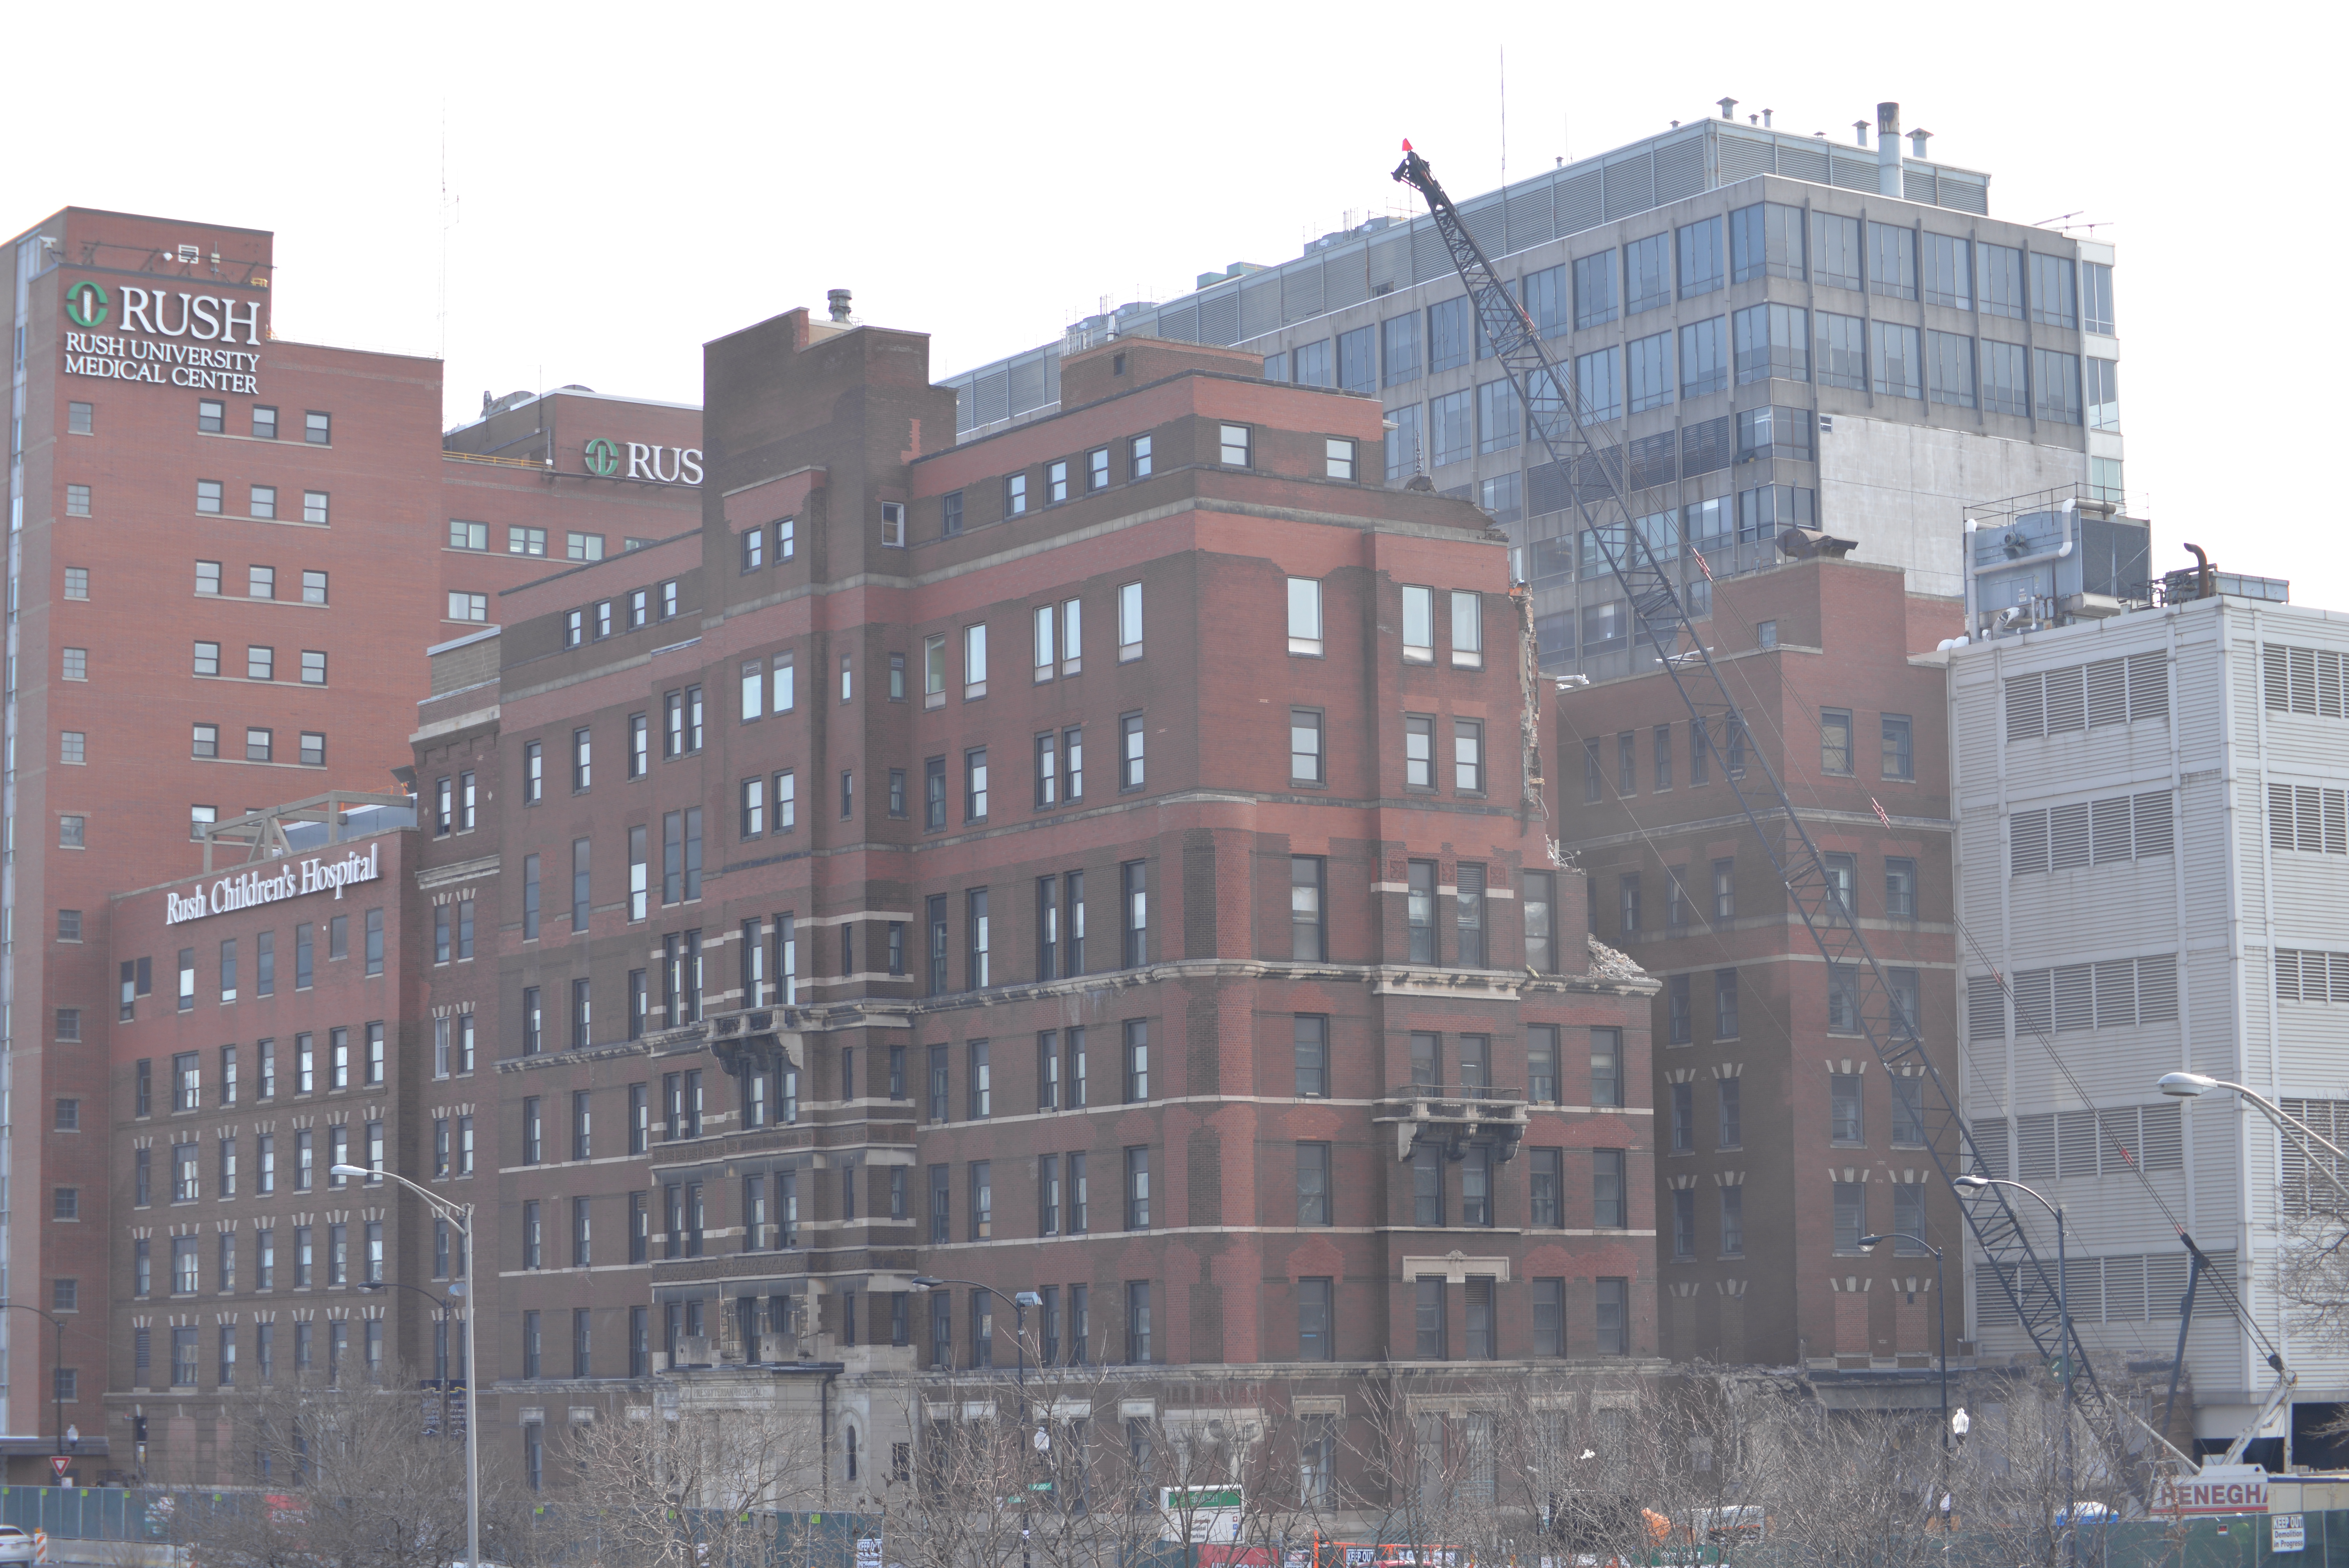 RUSH University Medical Center, Chicago - healthcare demolition project